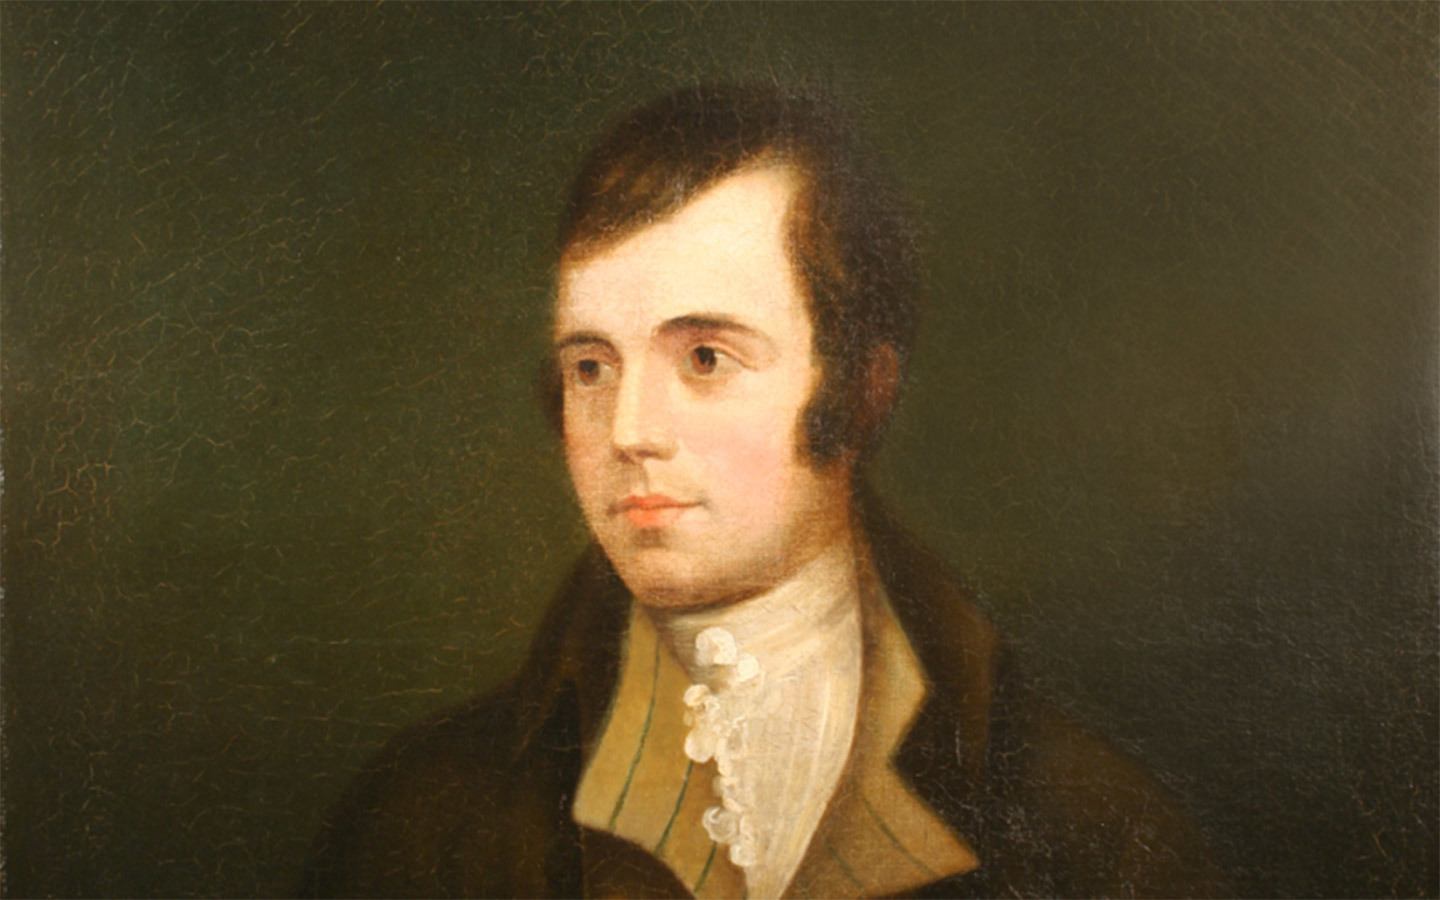 Oil painting of Robert Burns